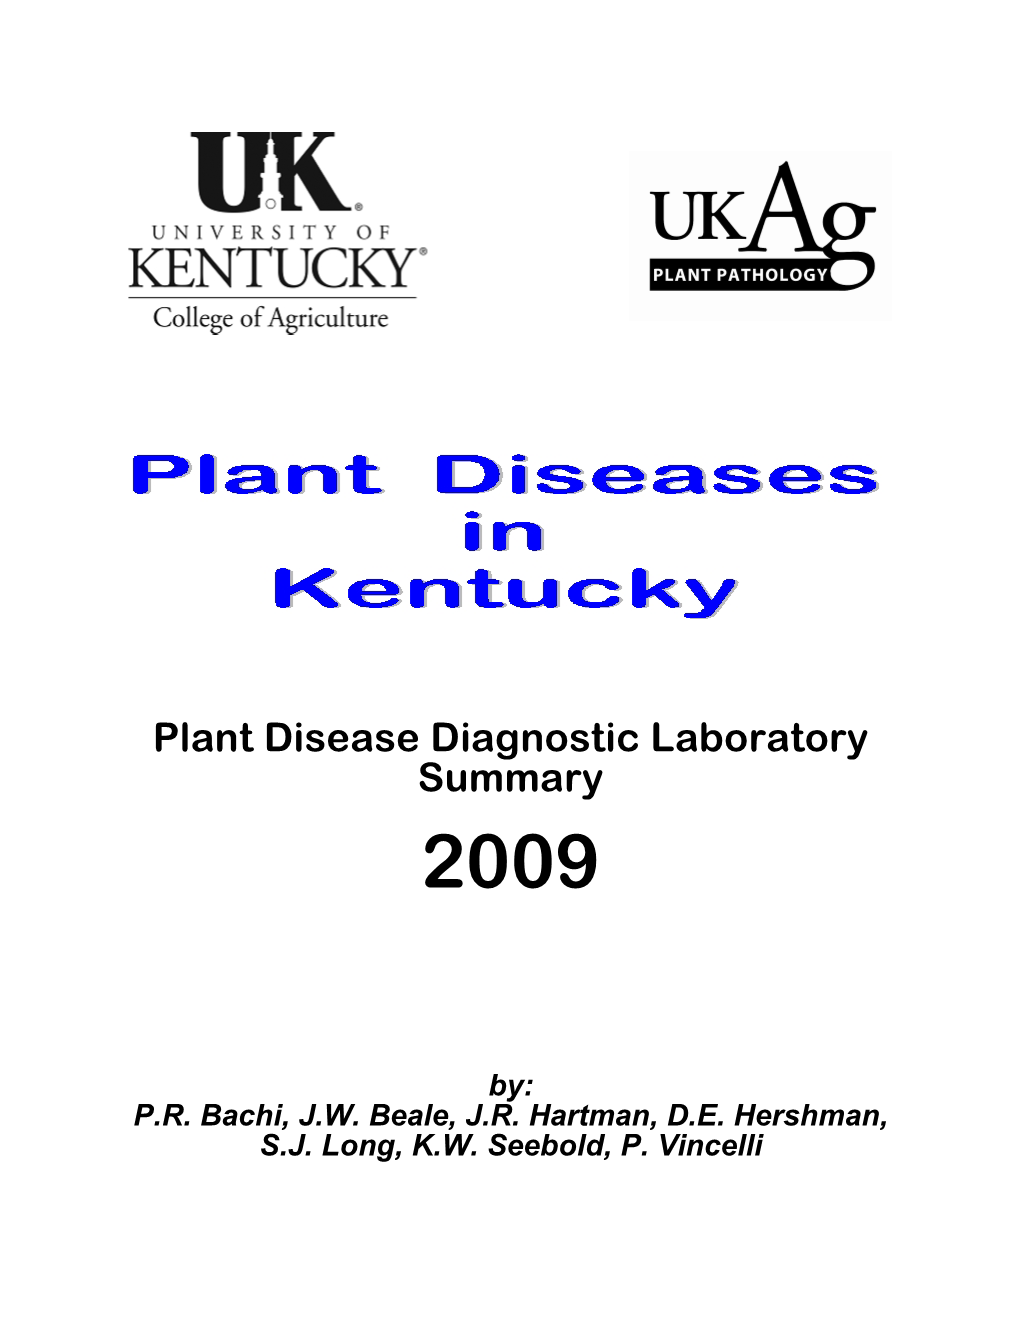 2009 Plant Disease Diagnostic Laboratory Report